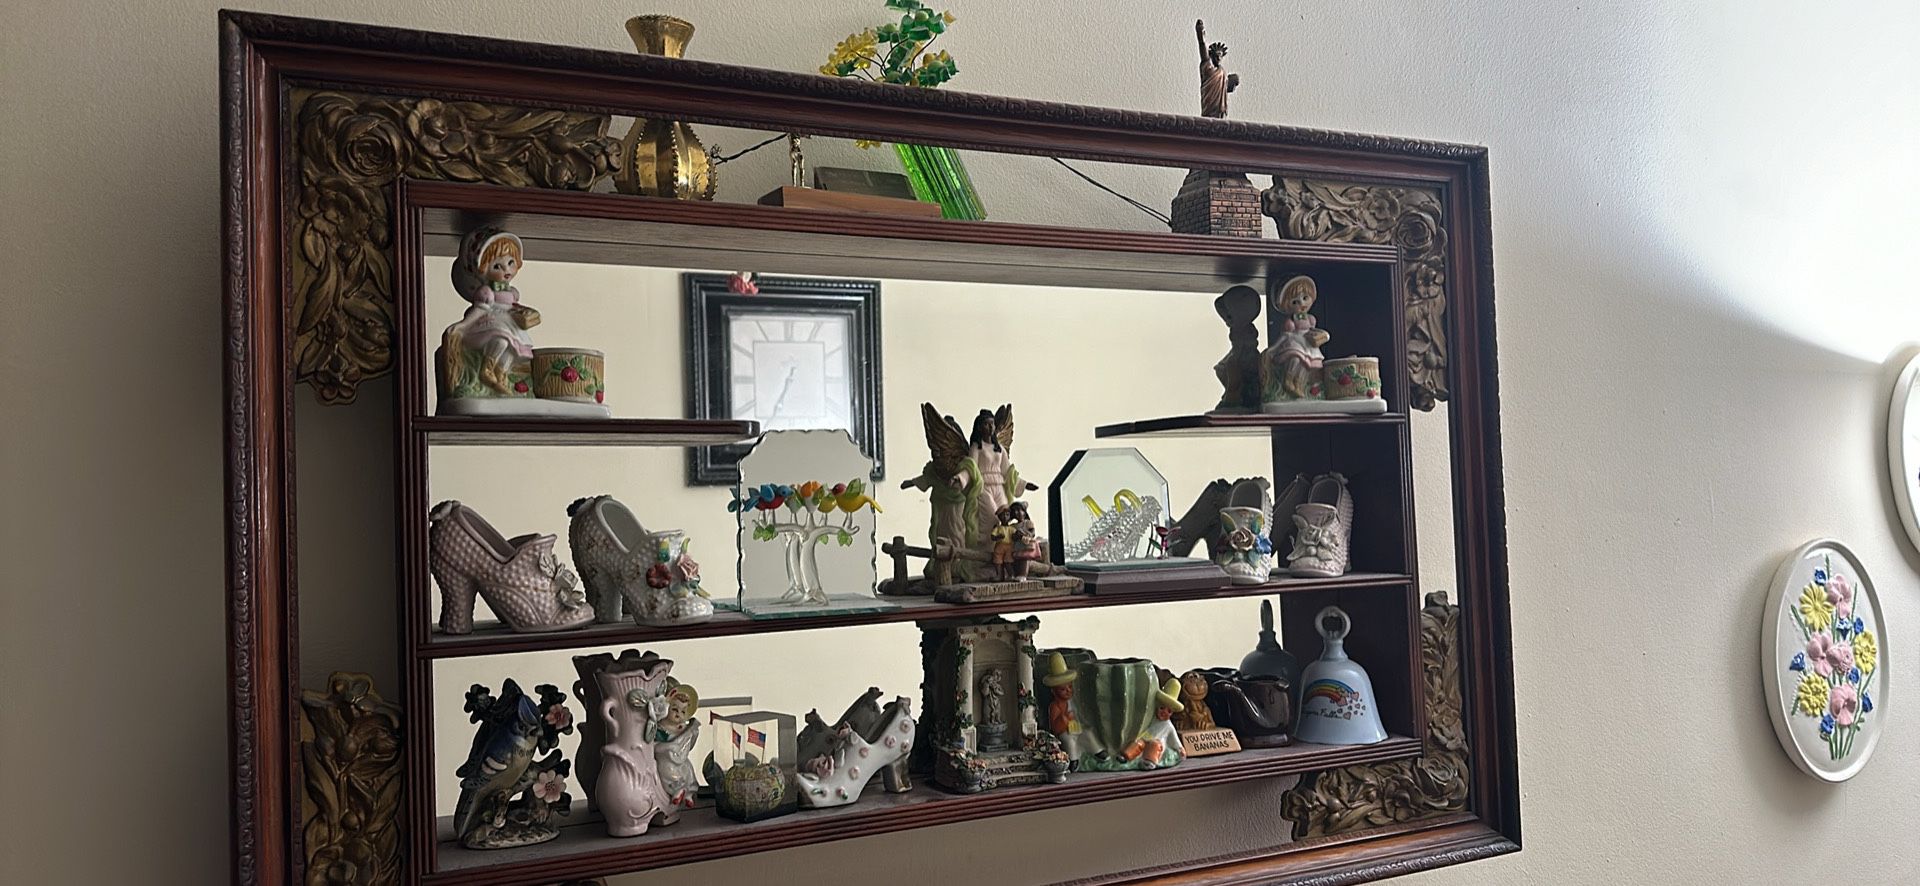 Figurines & Mirror Shelf $65